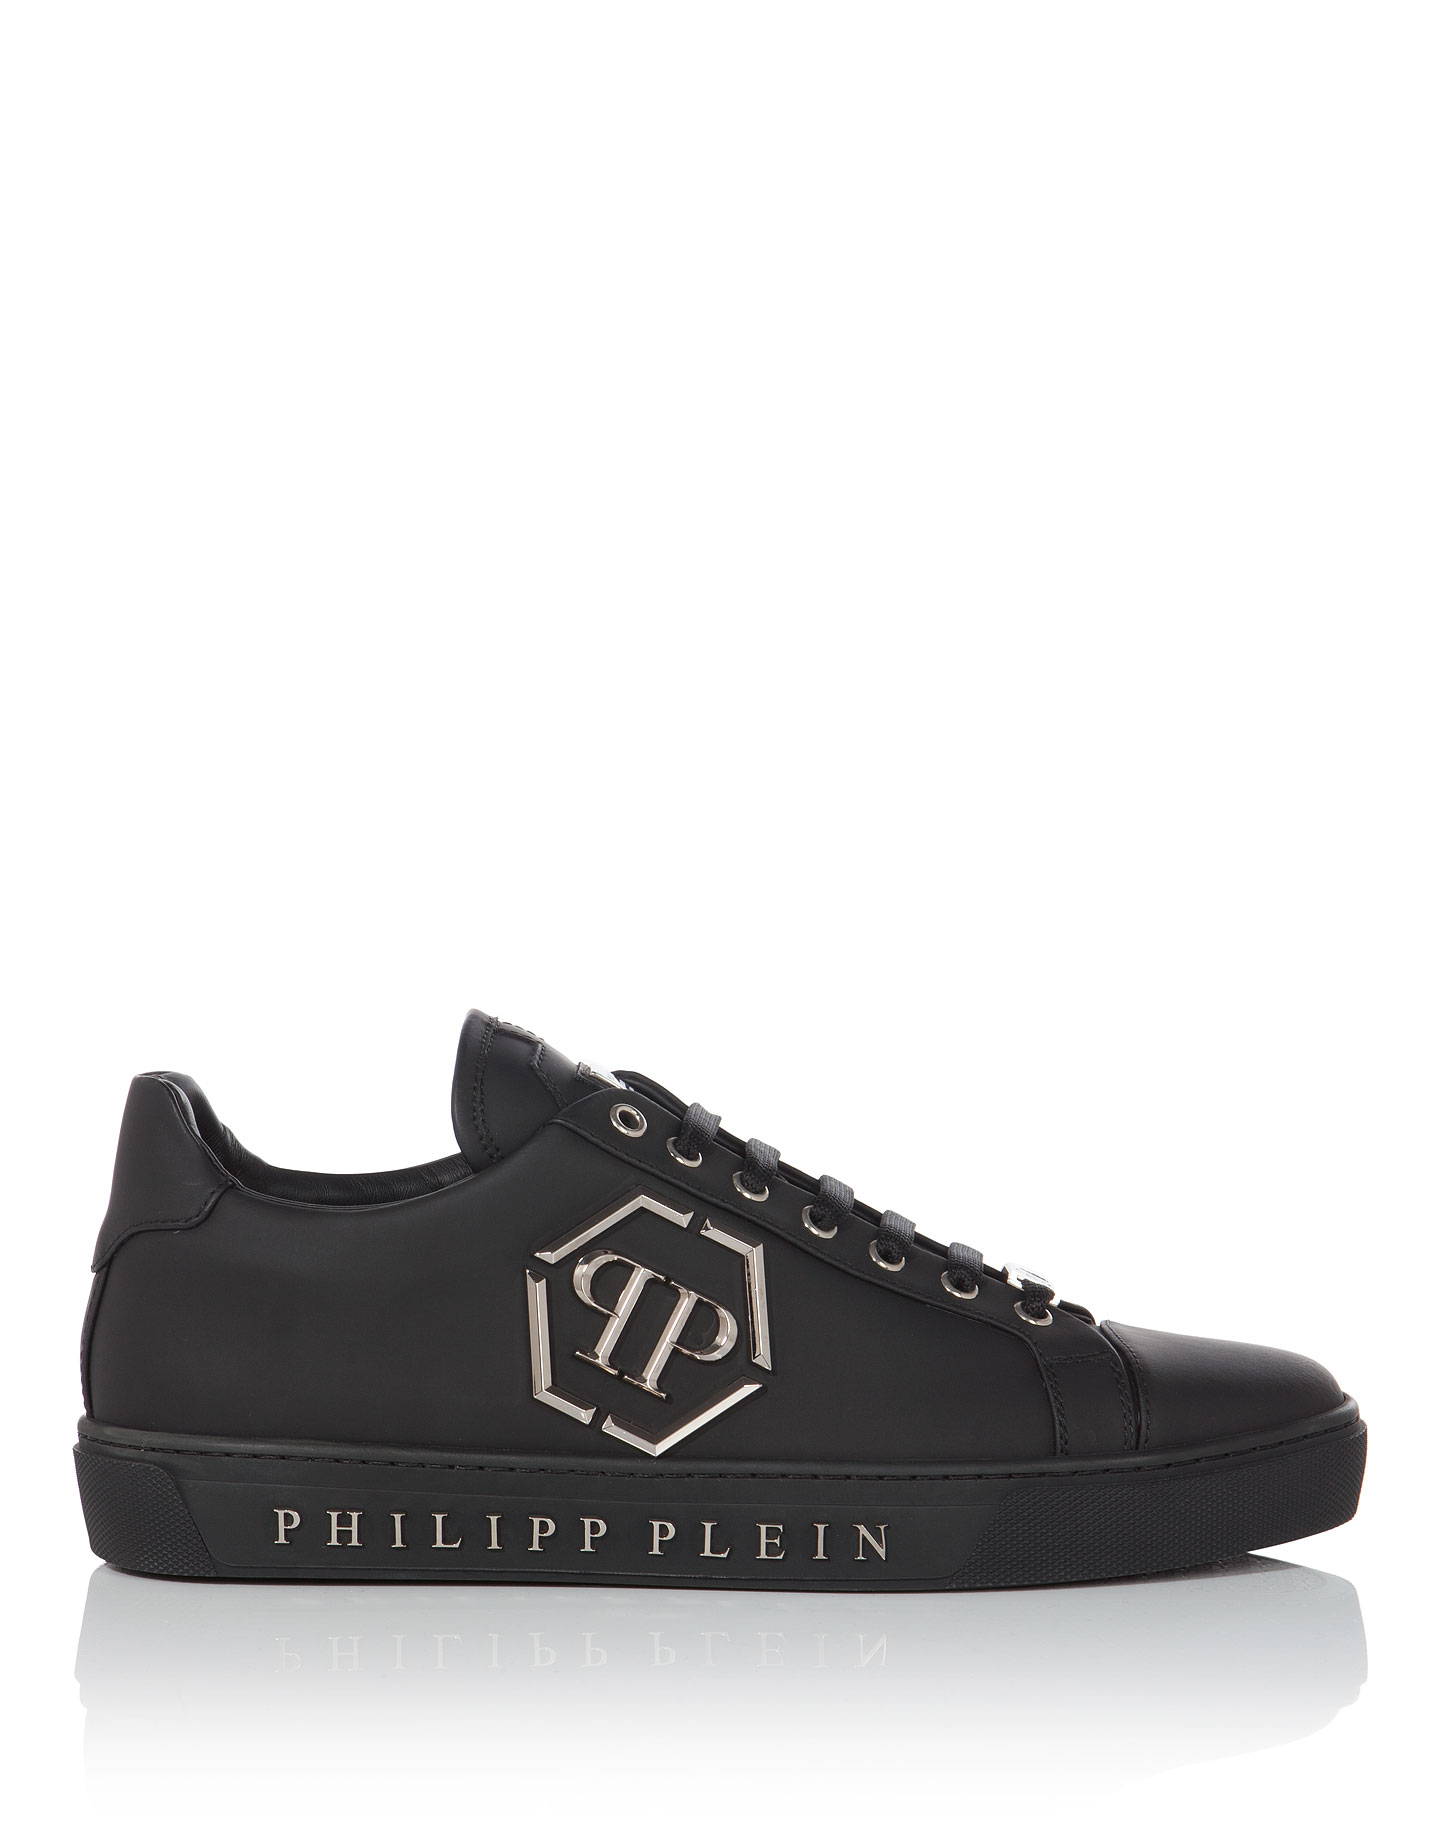 philipp plein sneakers black